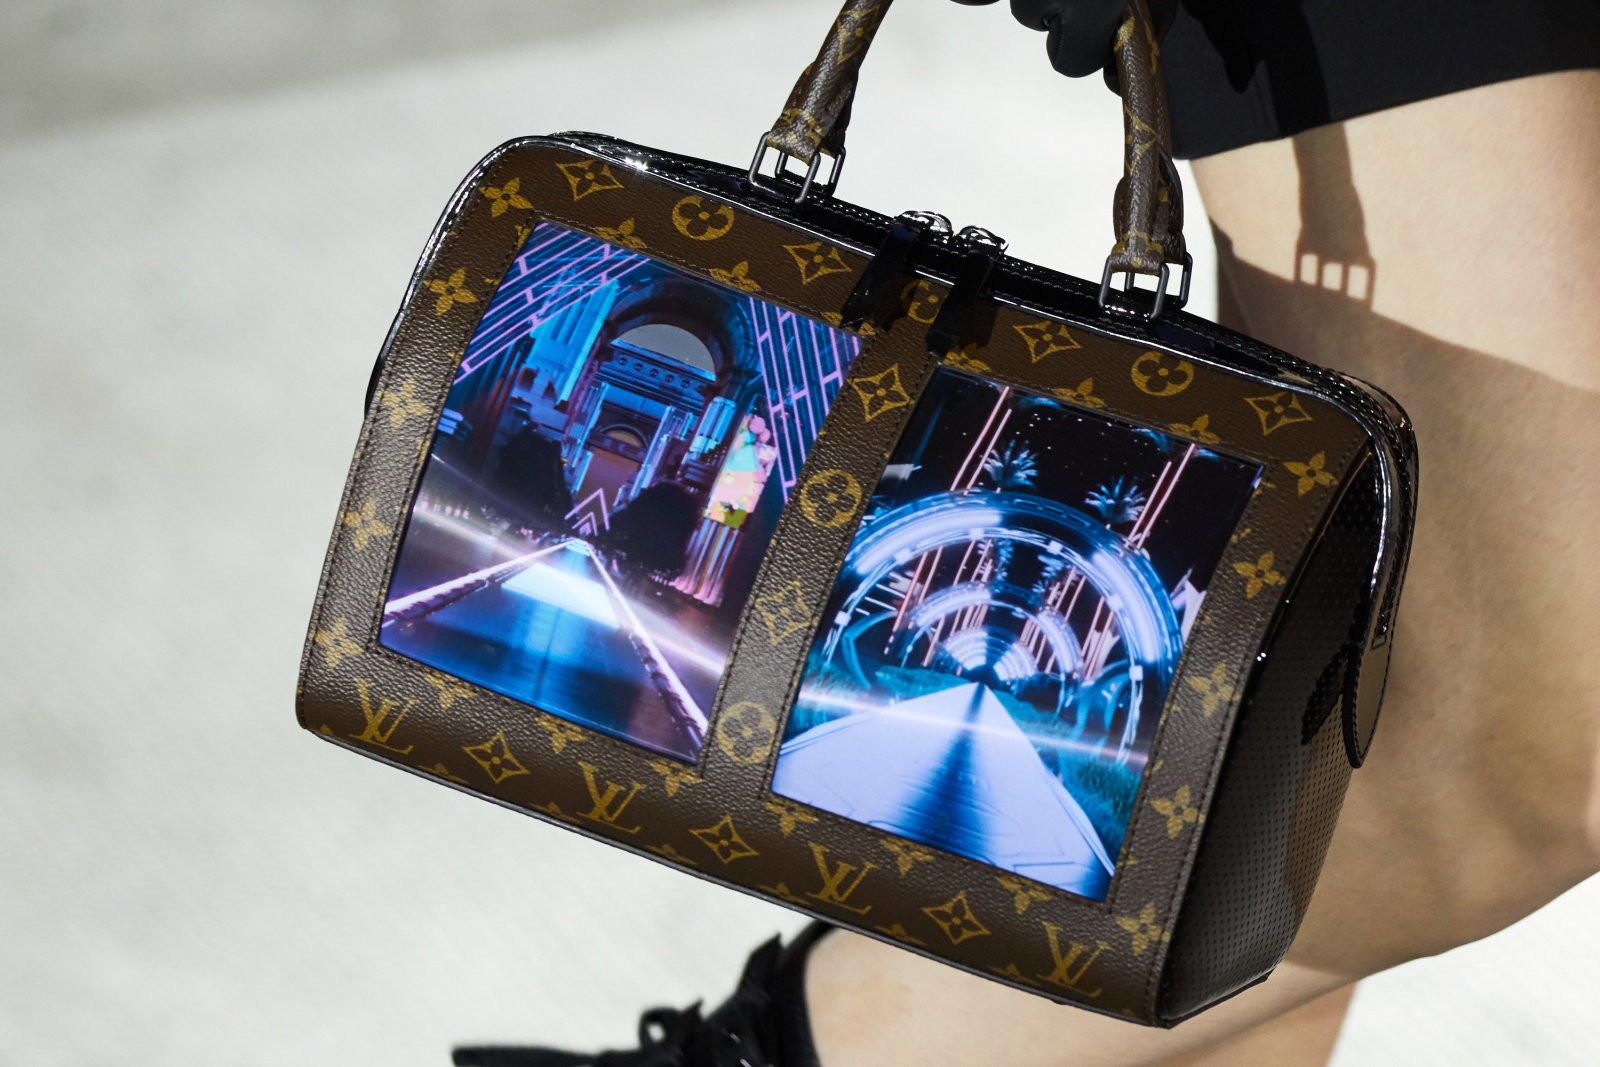 Louis Vuitton Bags Now Have Flexible Displays - UNBOX PH